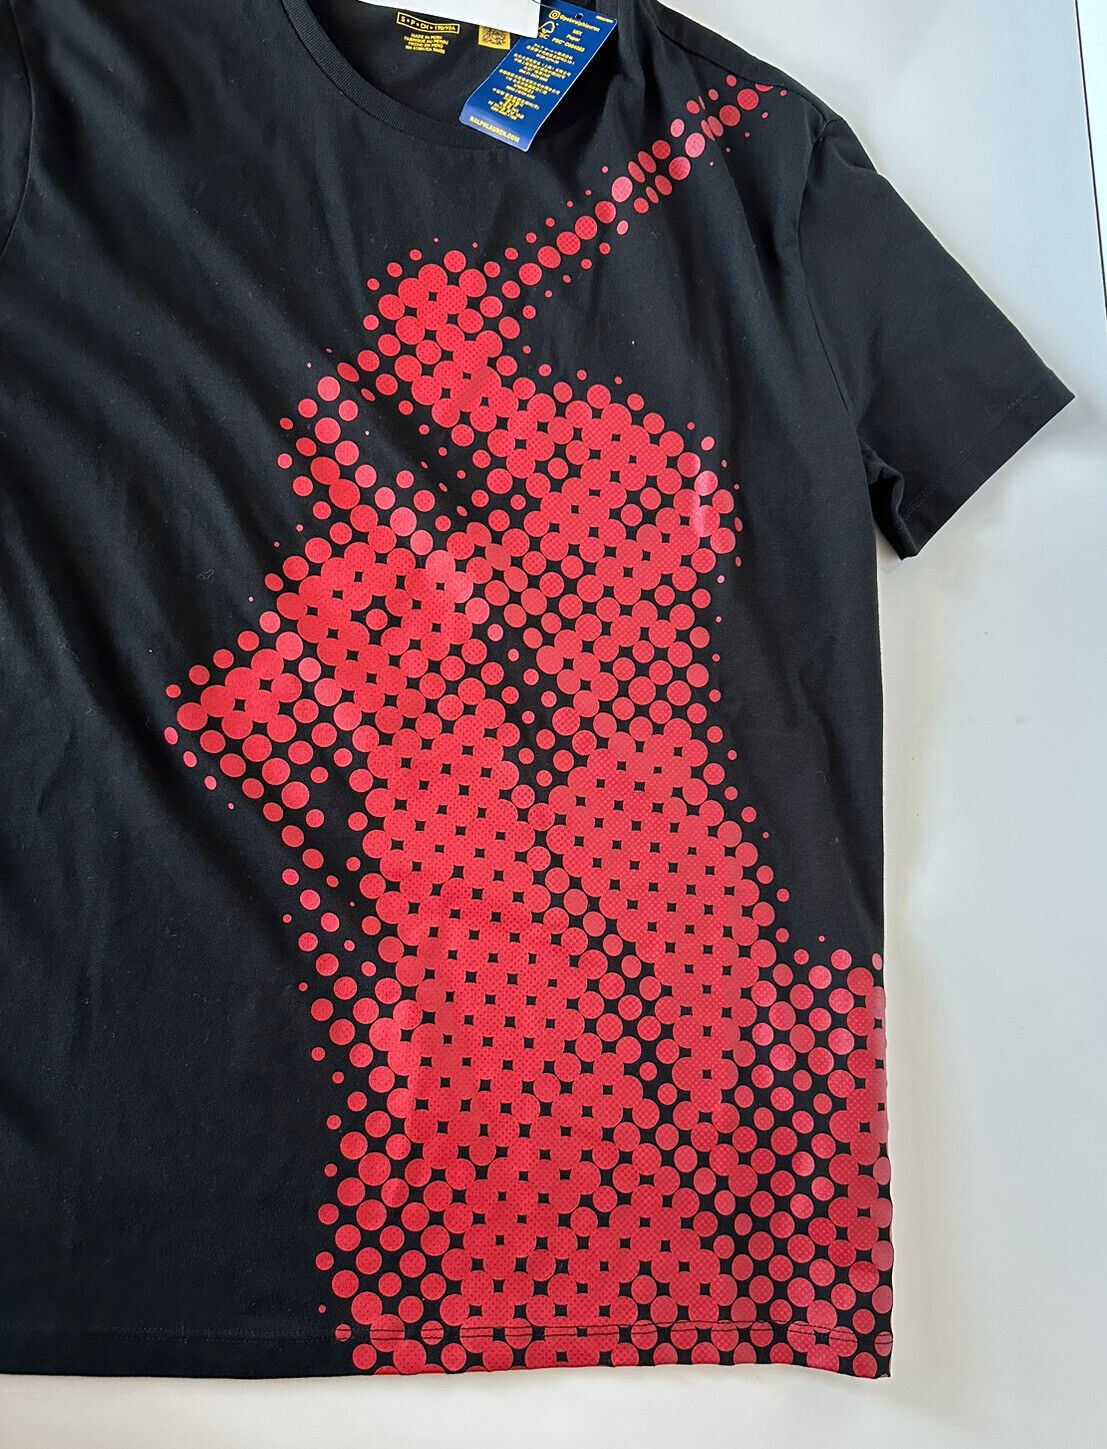 Neu mit Etikett: 65 $ Polo Ralph Lauren Kurzarm-Logo-T-Shirt Schwarz 2XL 